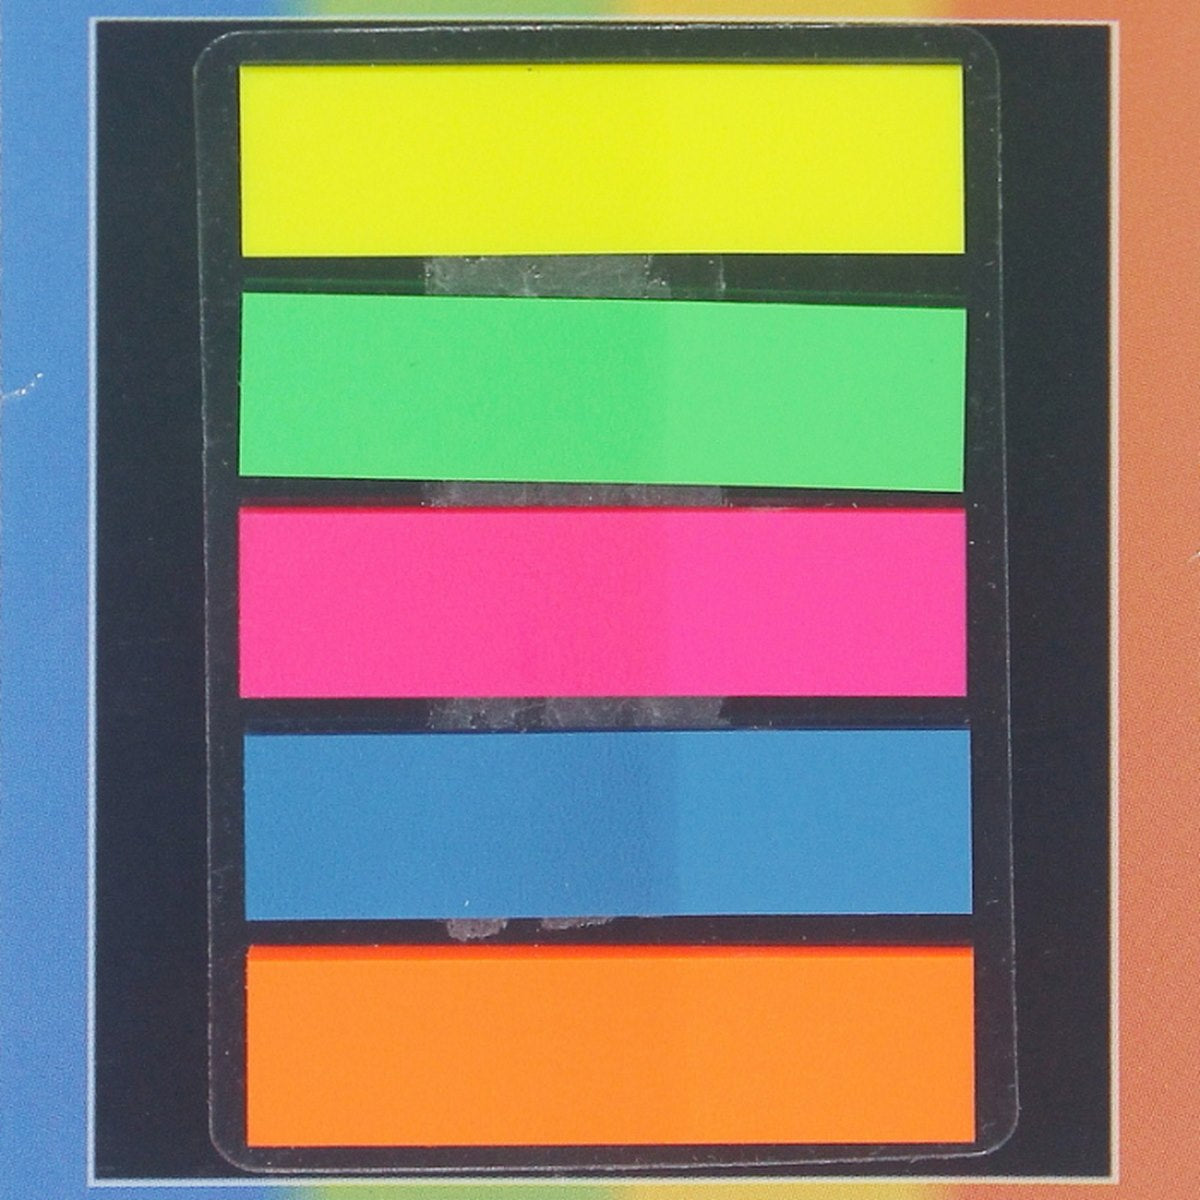 jags-mumbai sticky notes Neon Plastic Flag Index